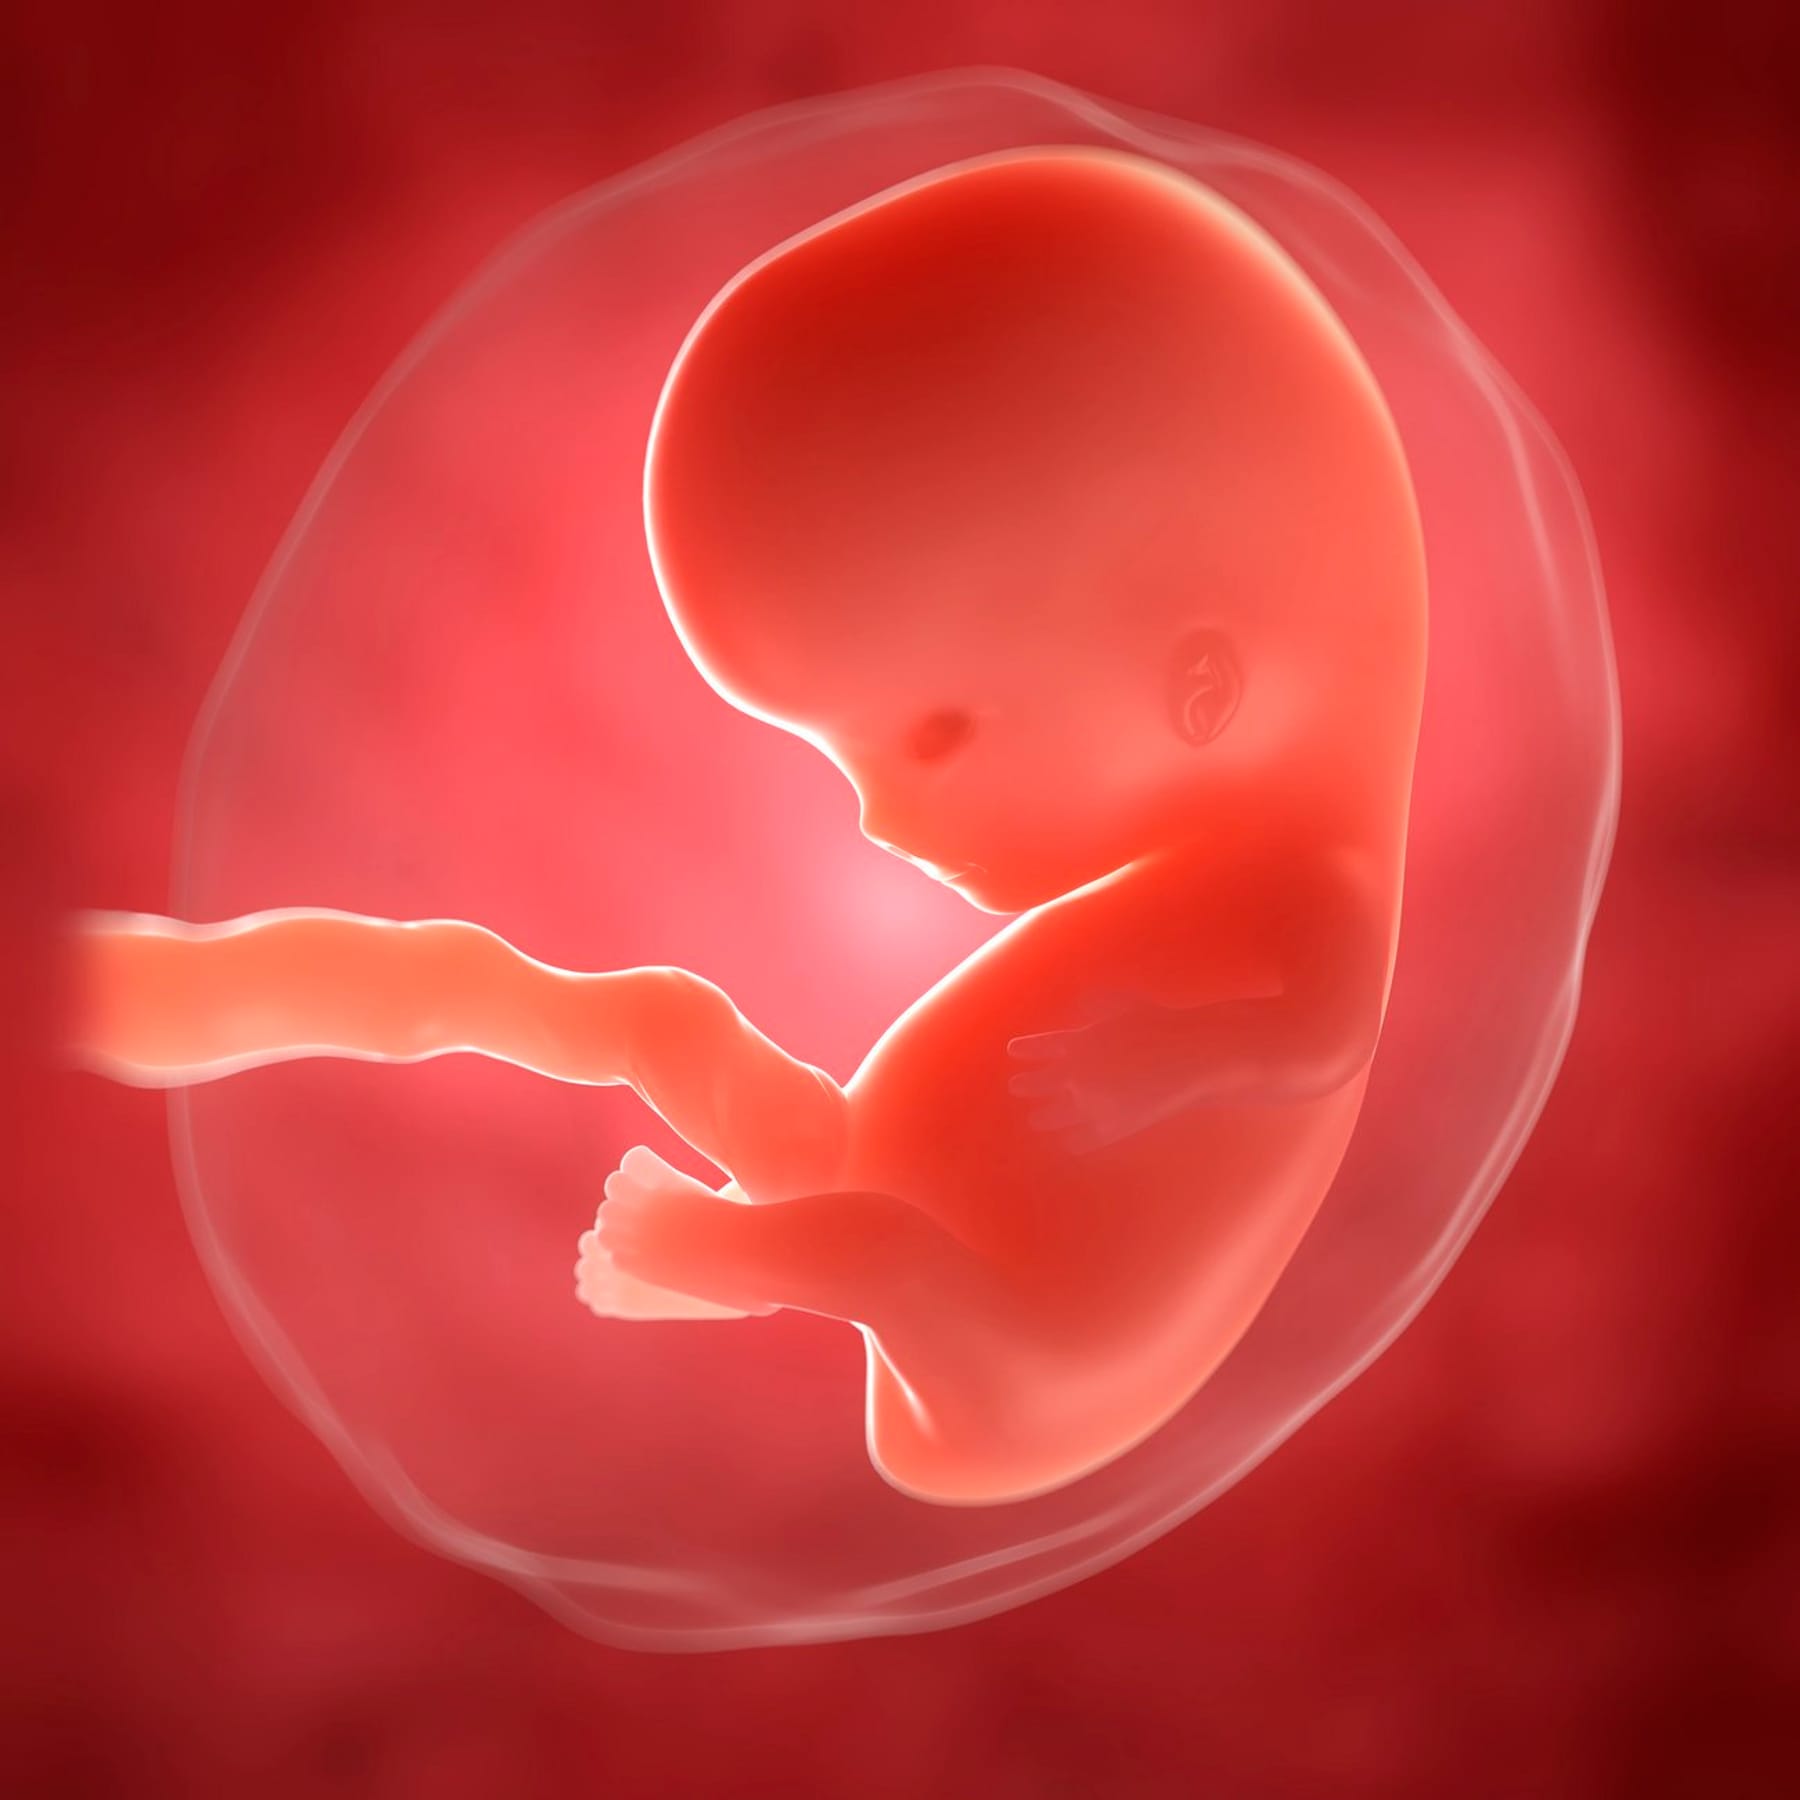 Ребенок в животе 2 неделя. Эмбрион на 8 неделе беременности. Плод ребенка 1 триместр.